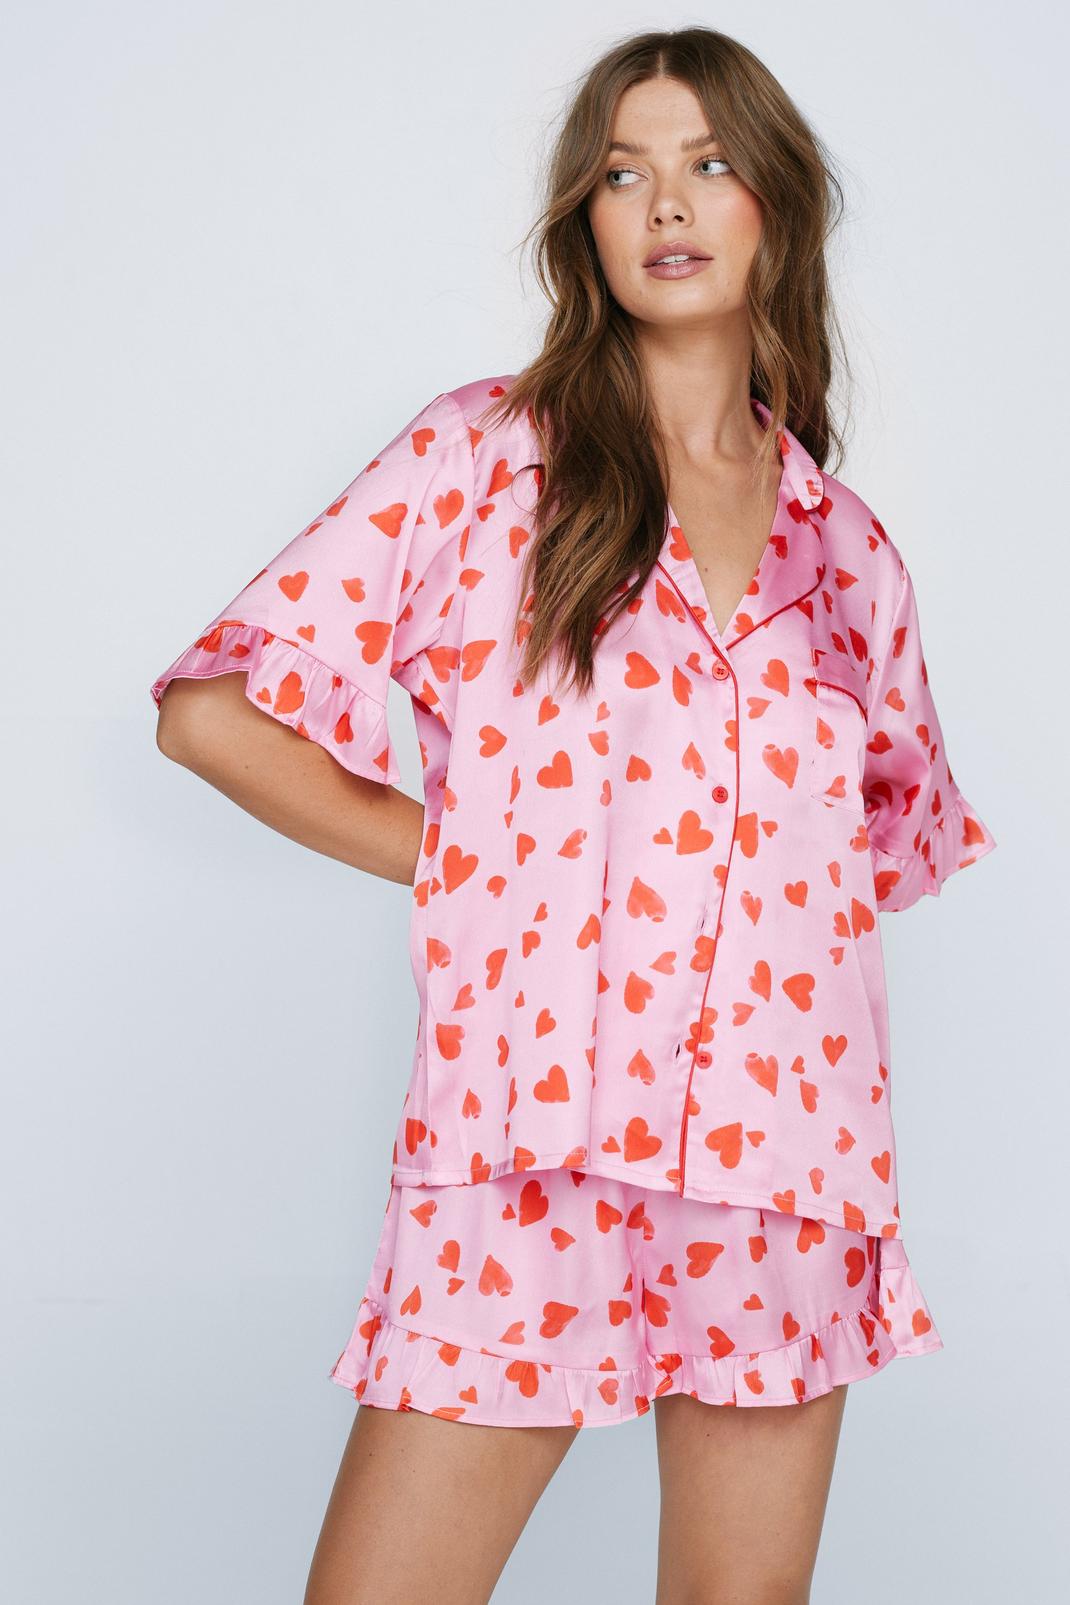 6-pc Satin Heart Print Pajama Set